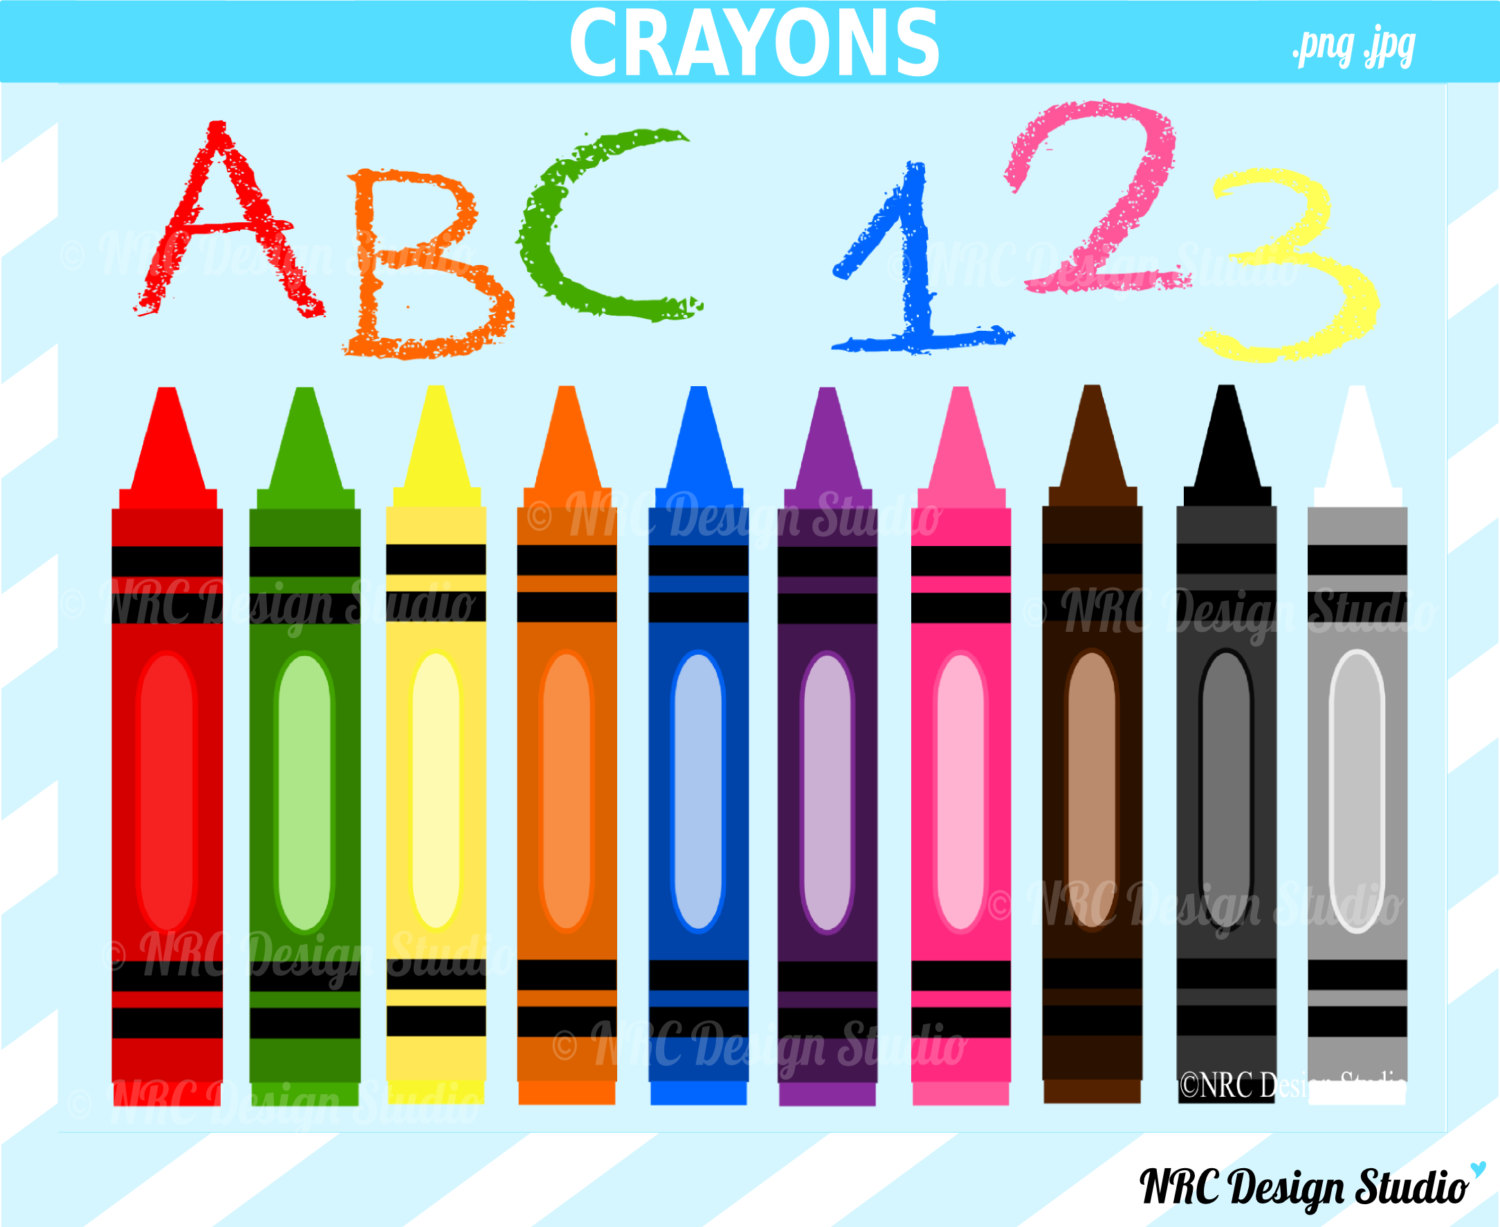 Free Crayon Clipart - Public Domain Crayon clip art, images and